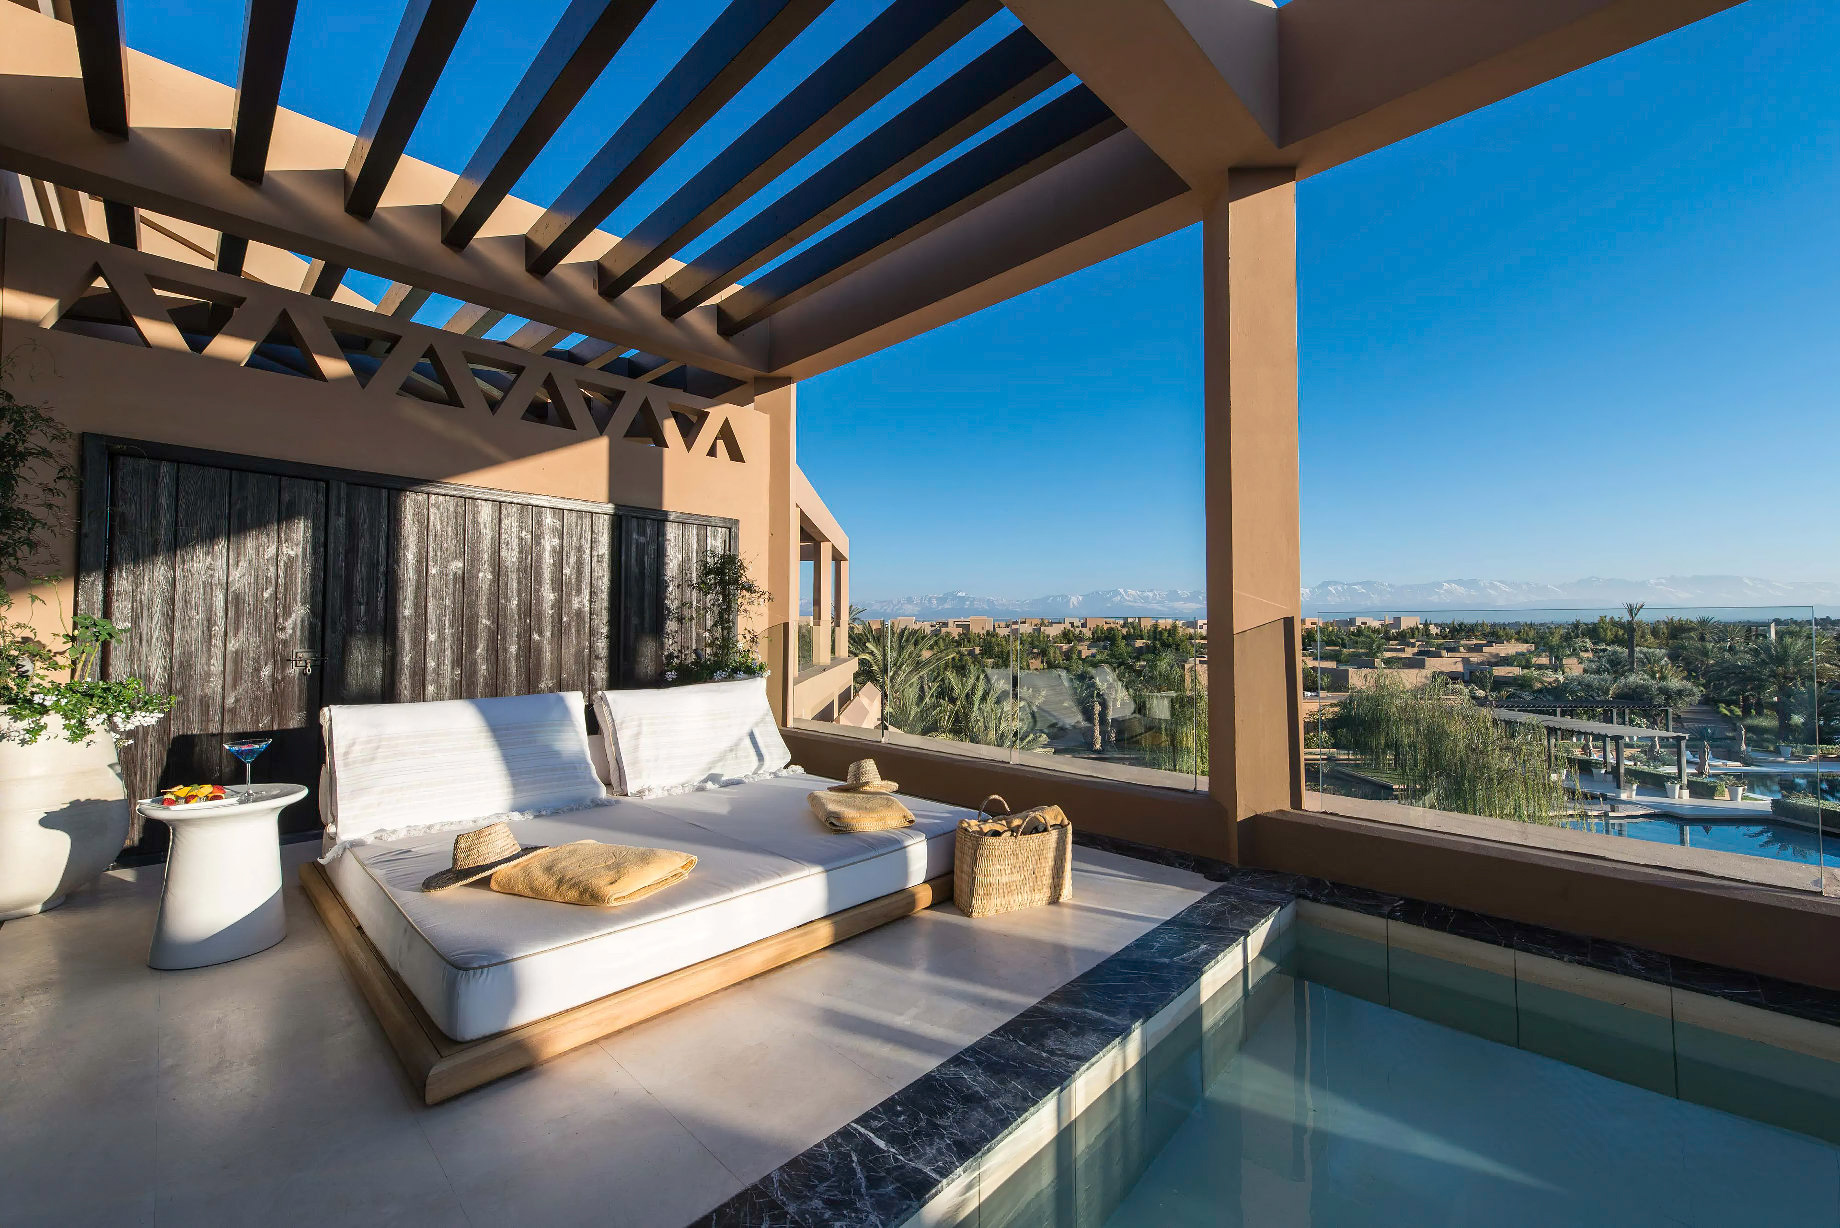 Mandarin Oriental, Marrakech Hotel – Marrakech, Morocco – Penthouse Terrace View